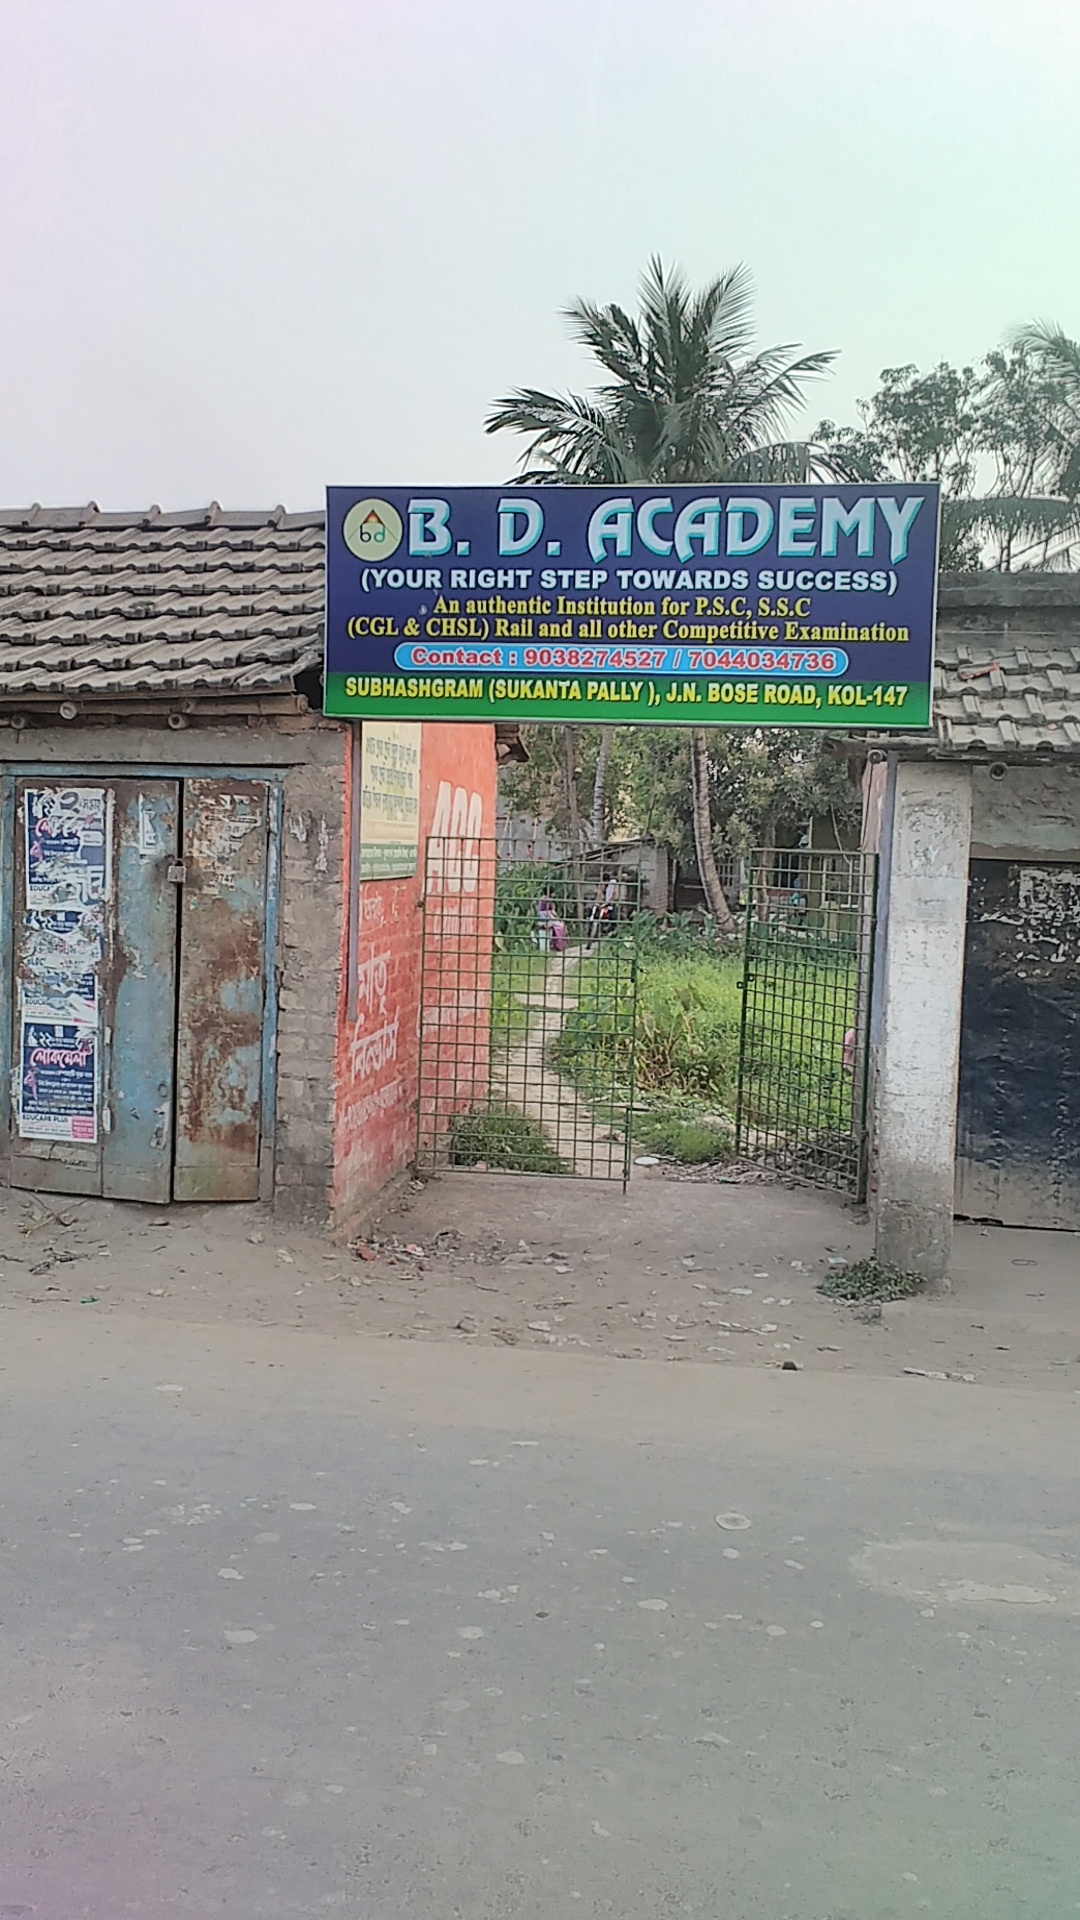 B.D. Academy